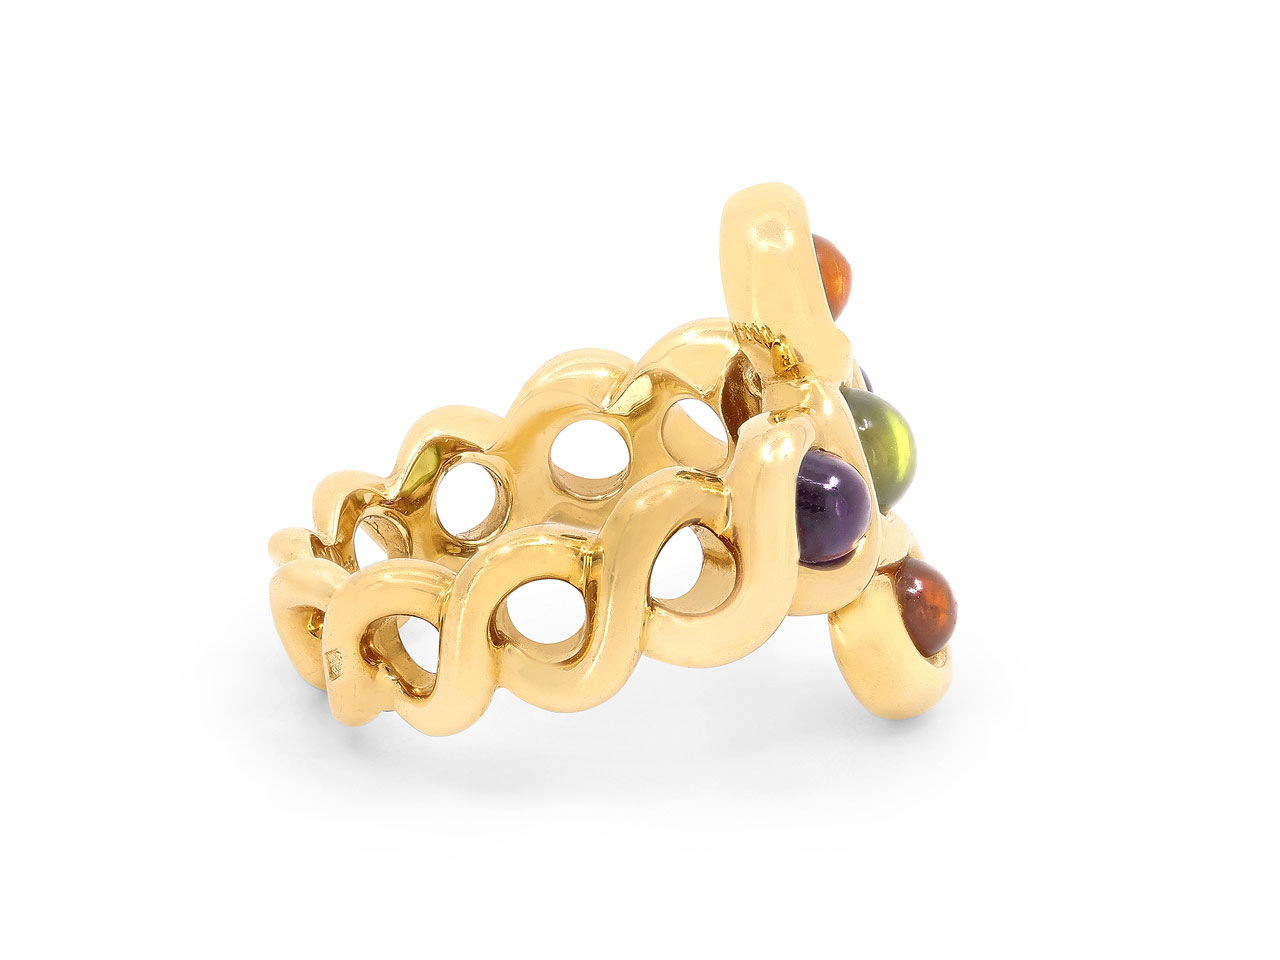 Chanel Multi-Gemstone Ring in 18K Gold